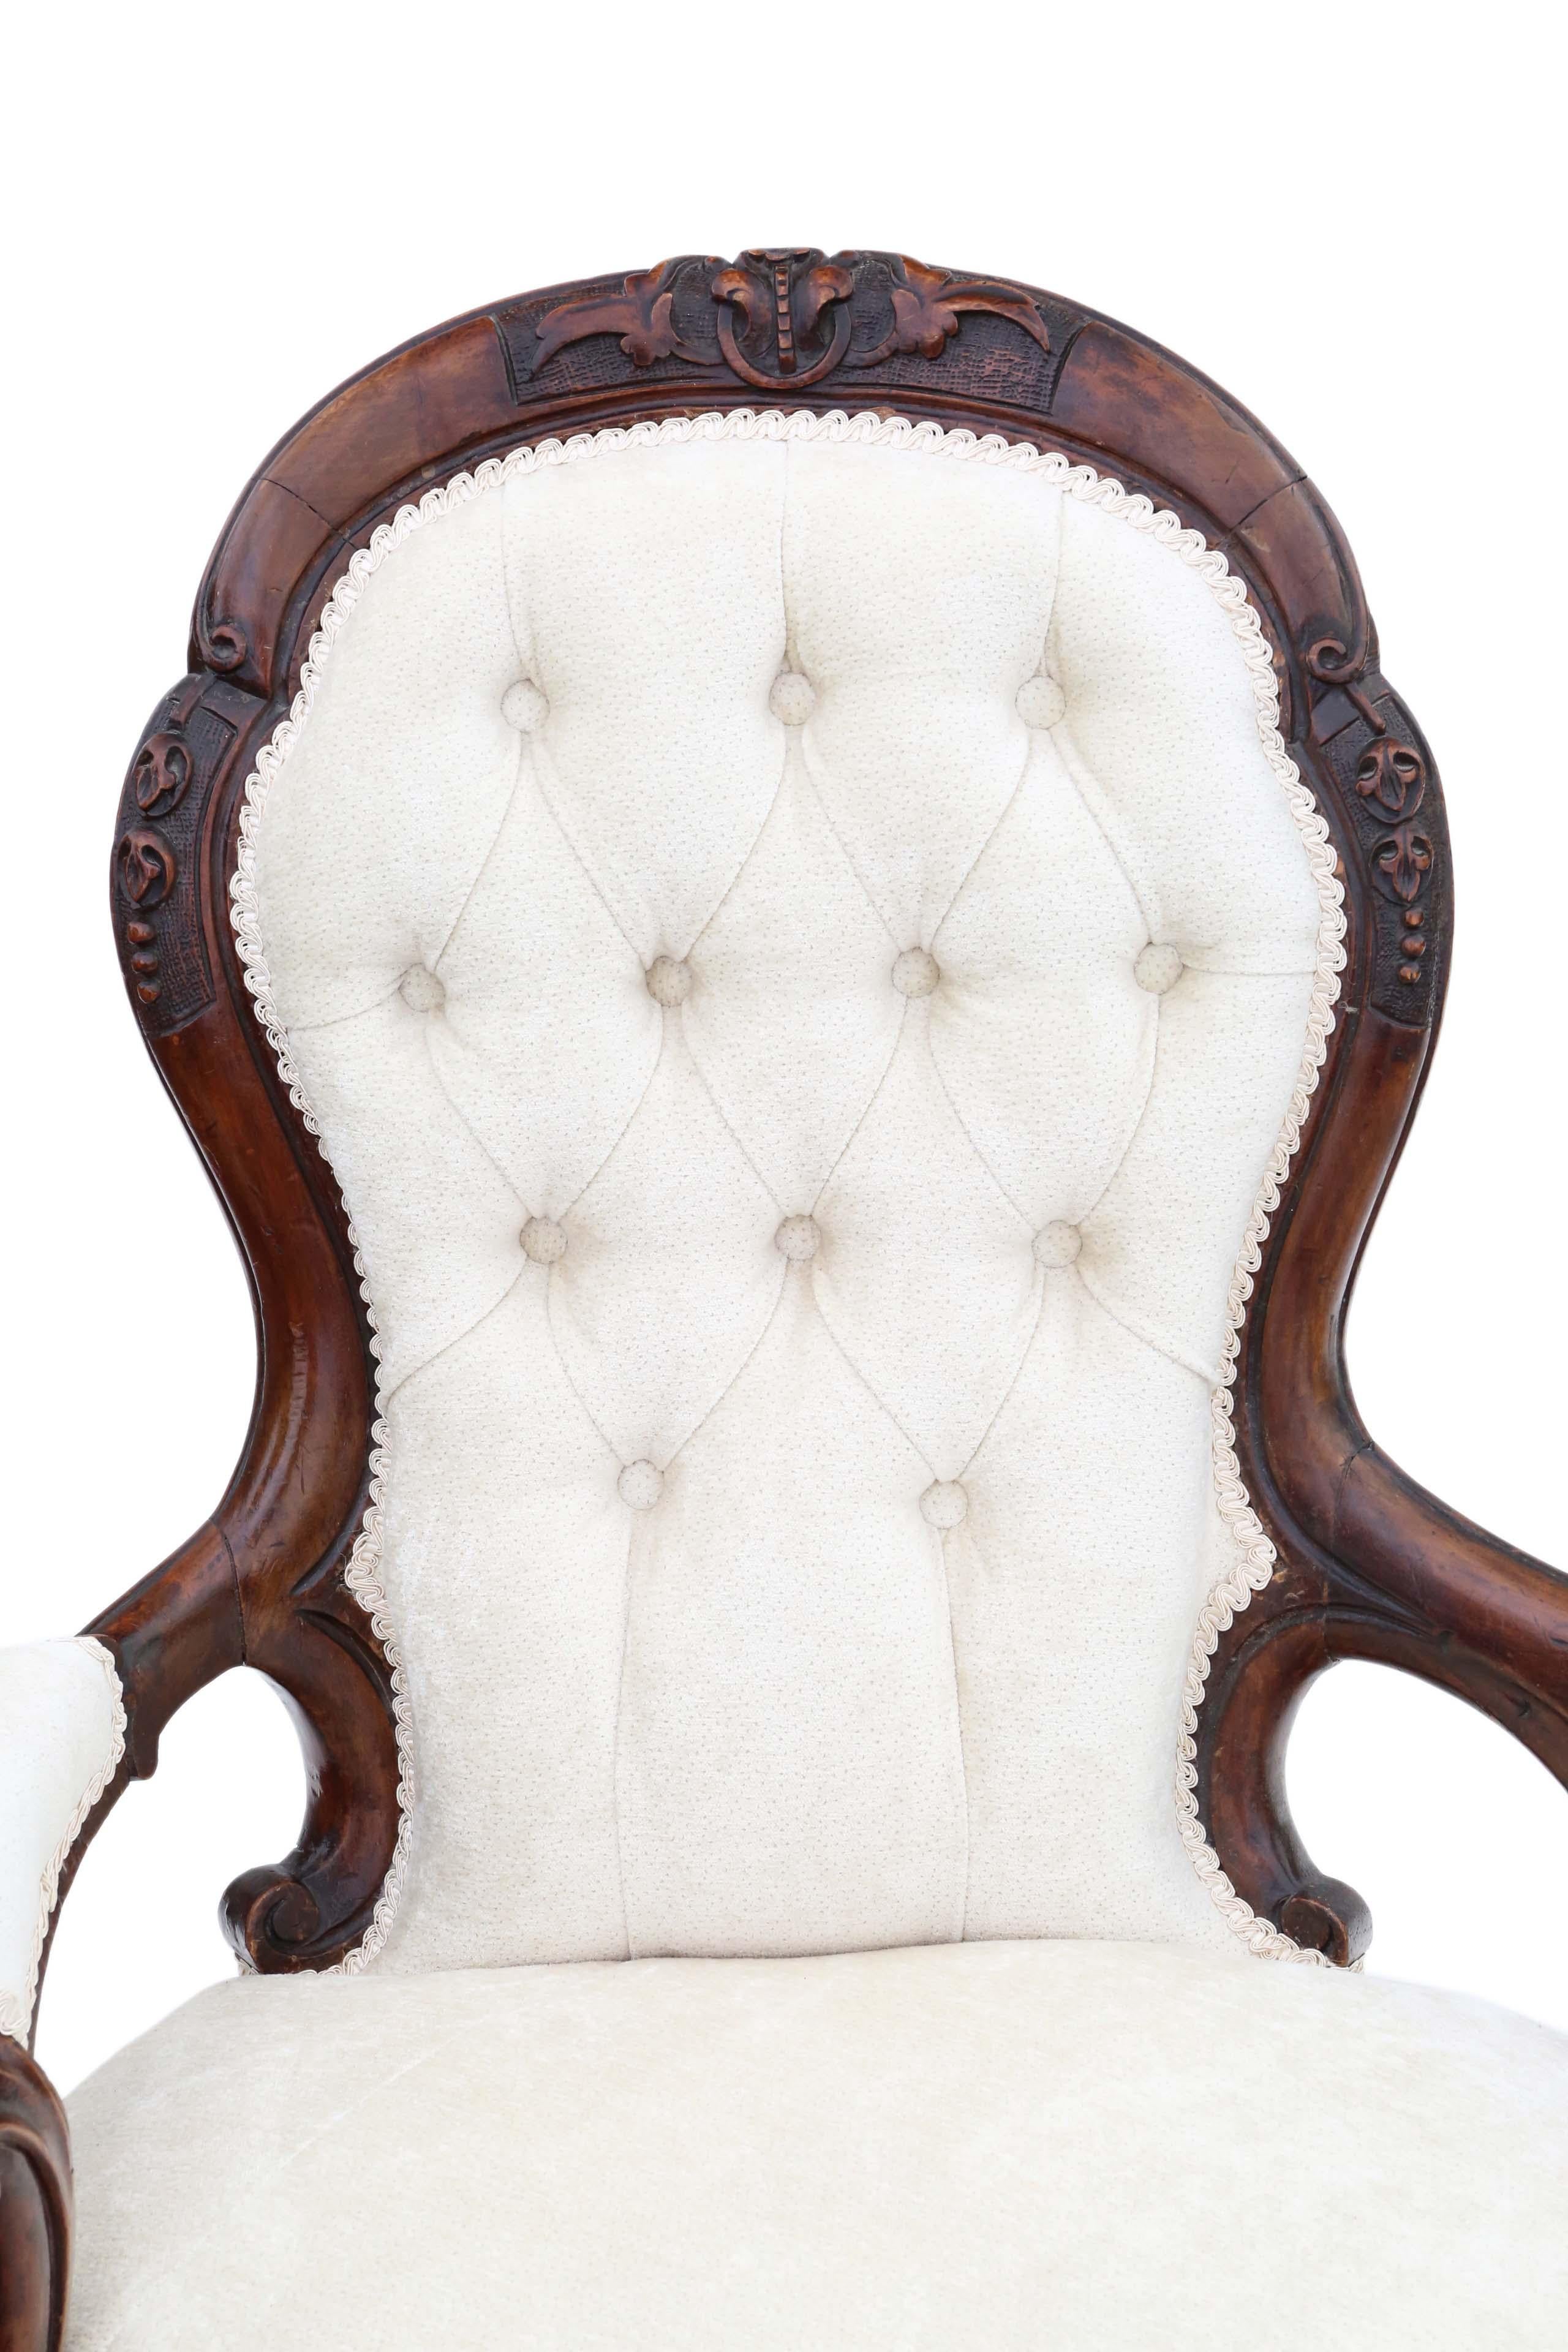 Antique Victorian C1860 Walnut Chaise Longue or Conversation Sofa For Sale 2